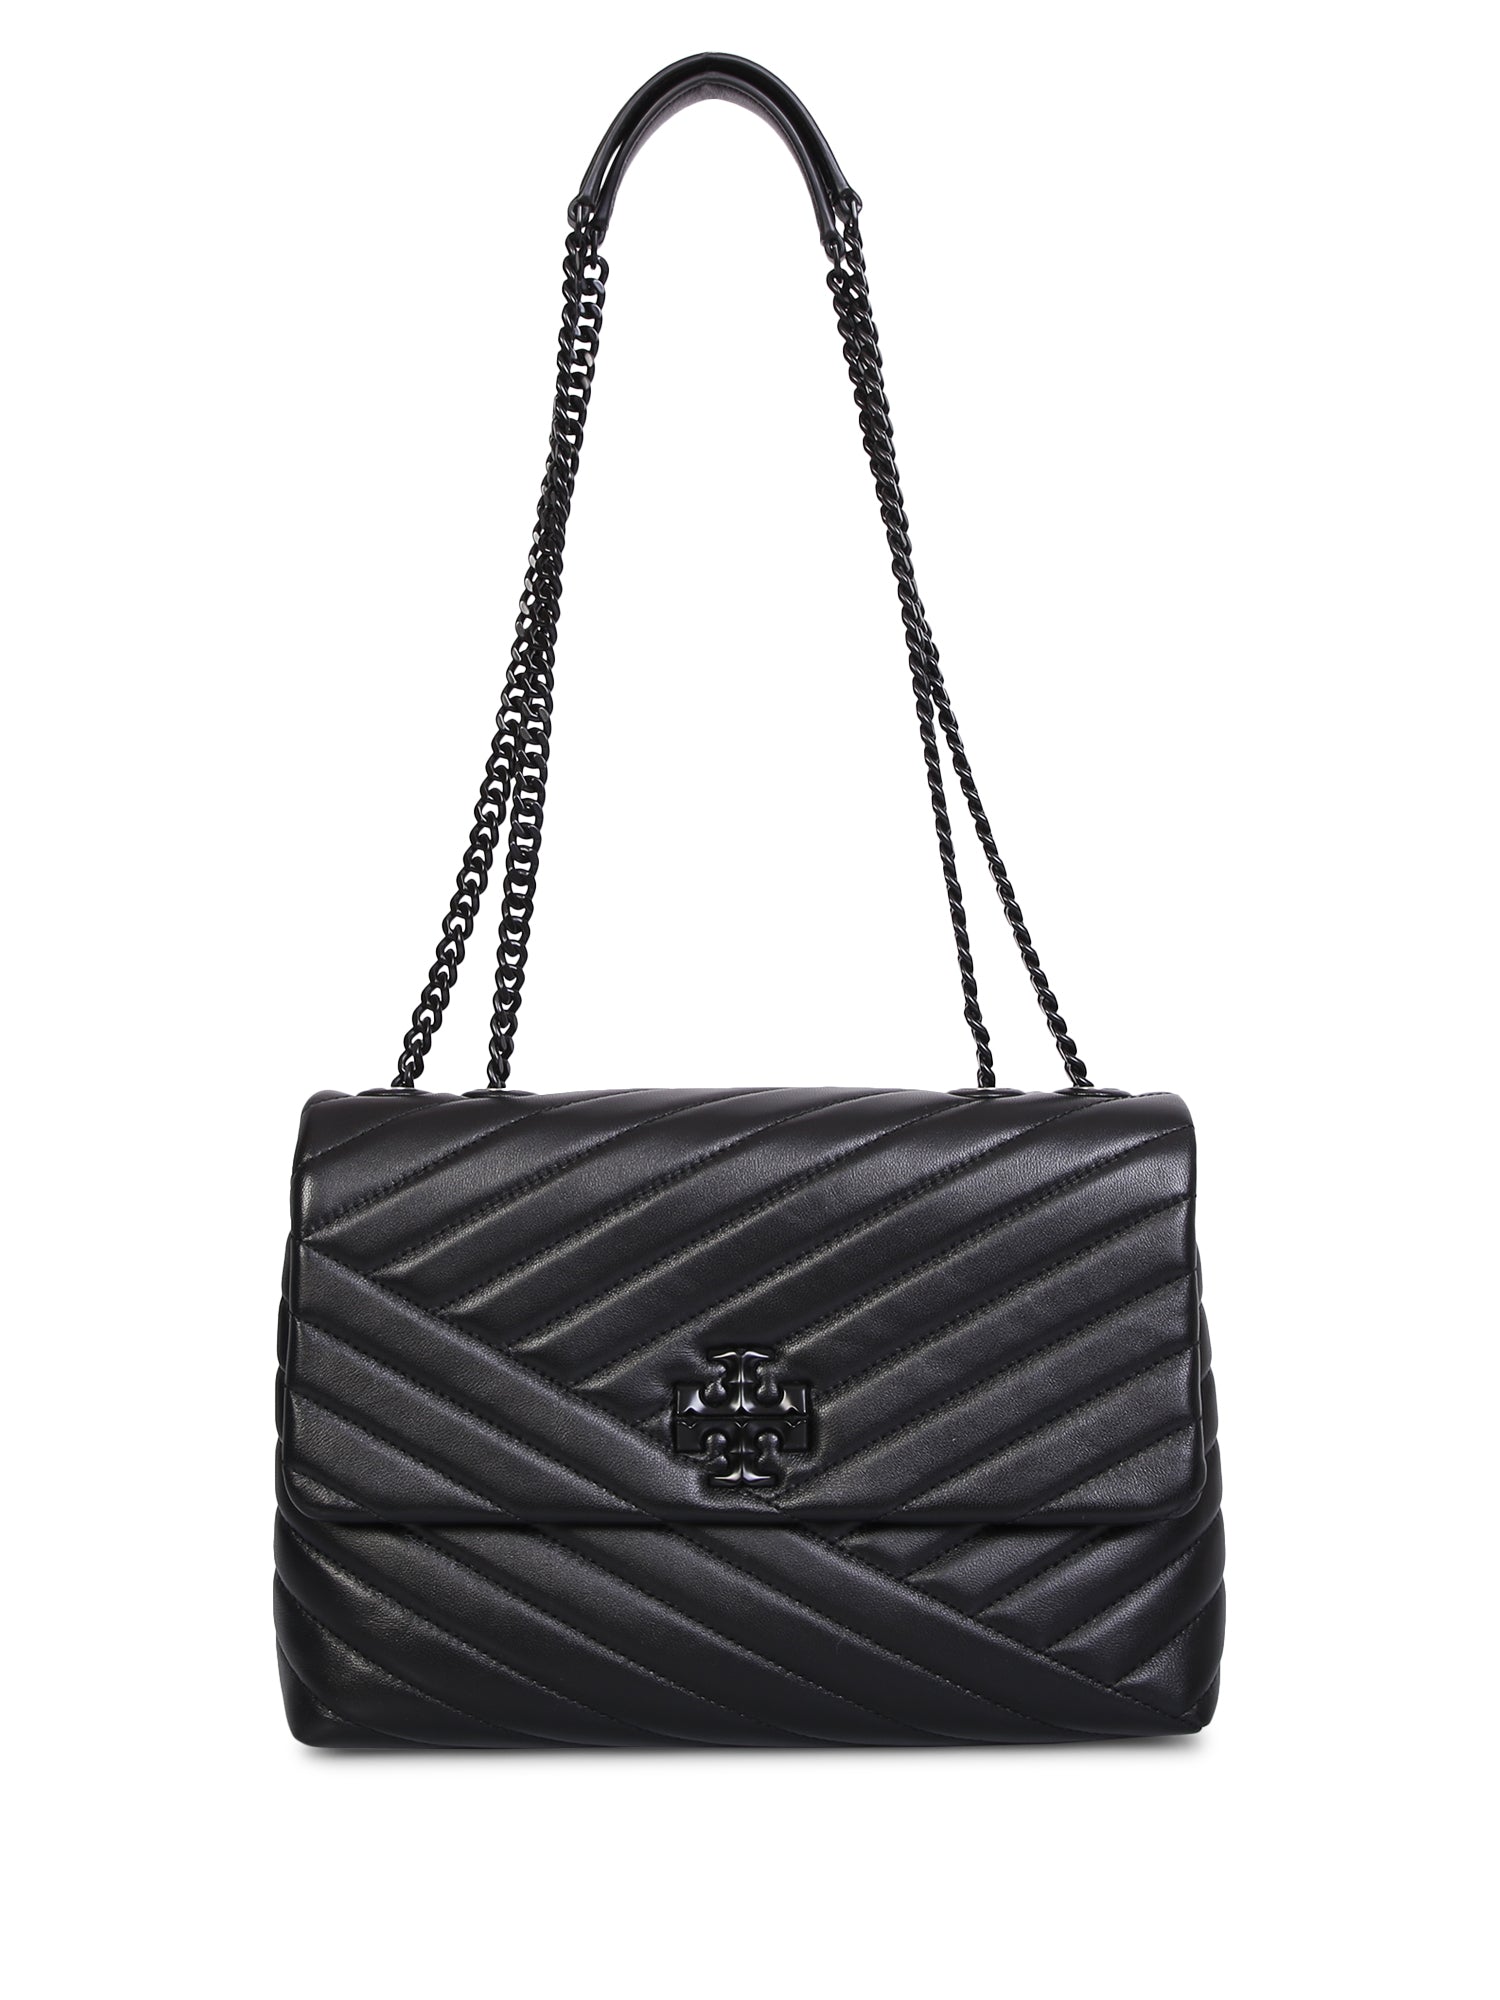 Kira quilted bag black – DELL'OGLIO